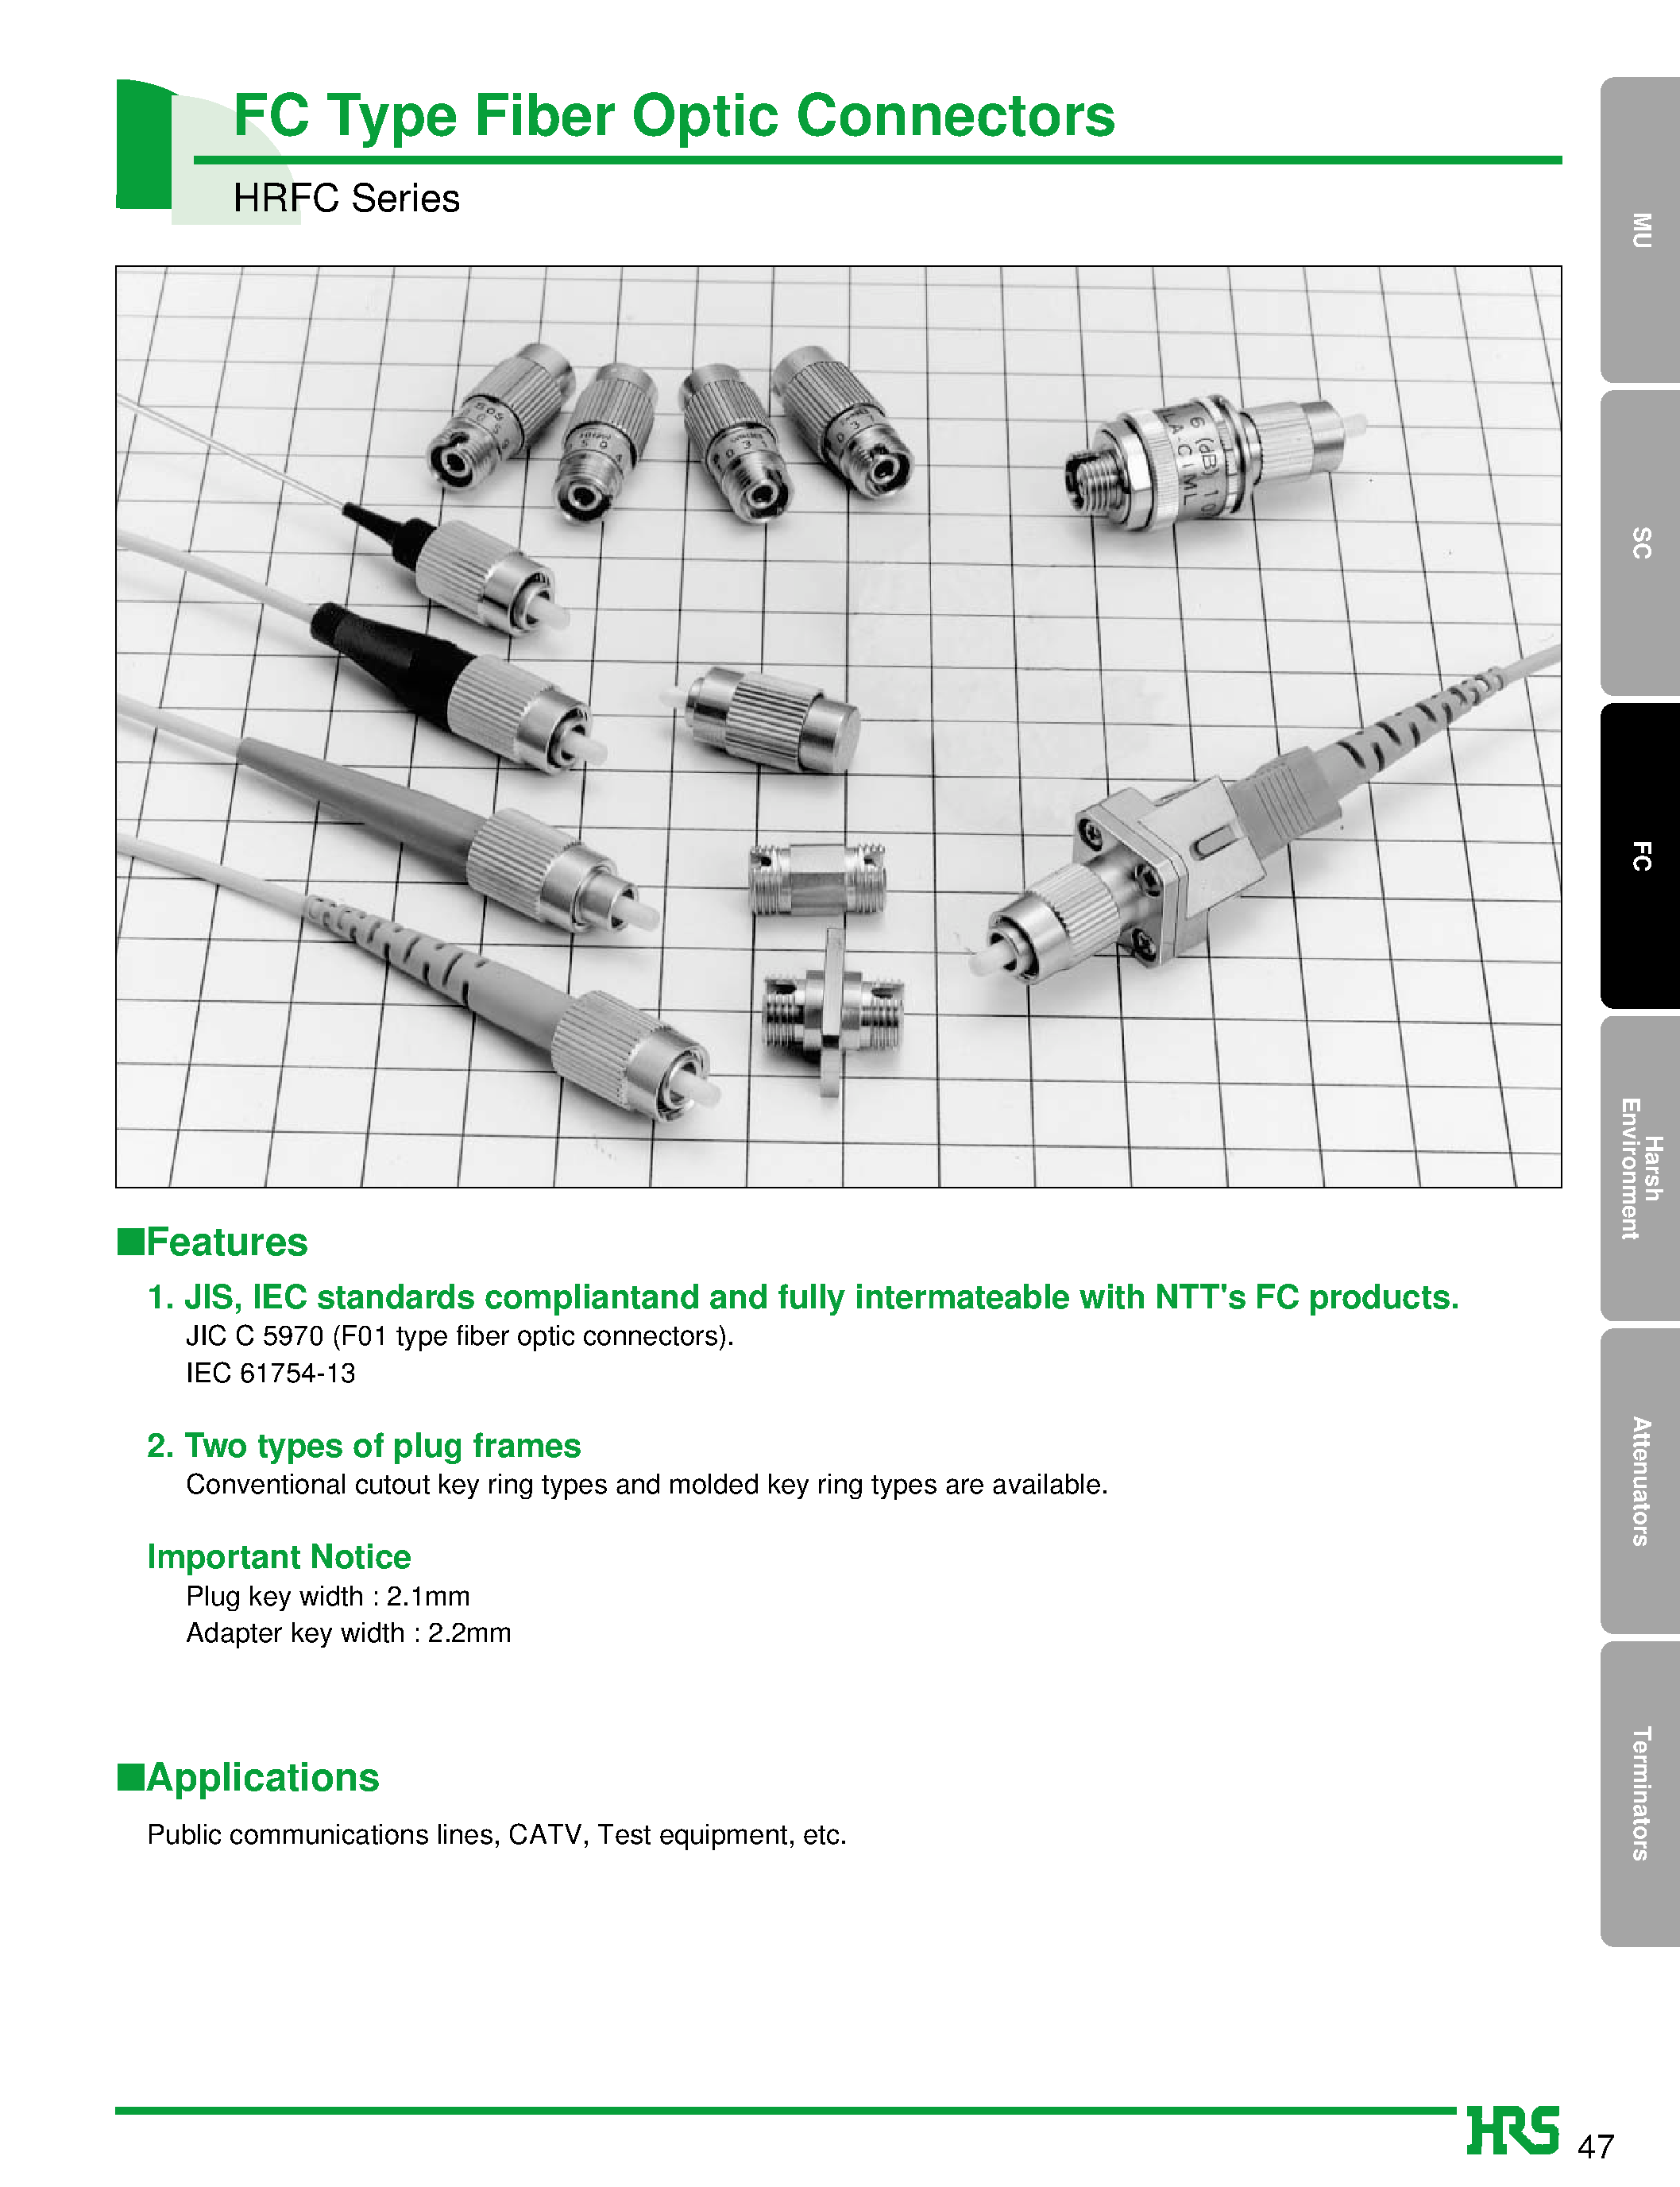 Datasheet HRFC-P1-H(04) - FC Type Fiber Optic Connectors page 1